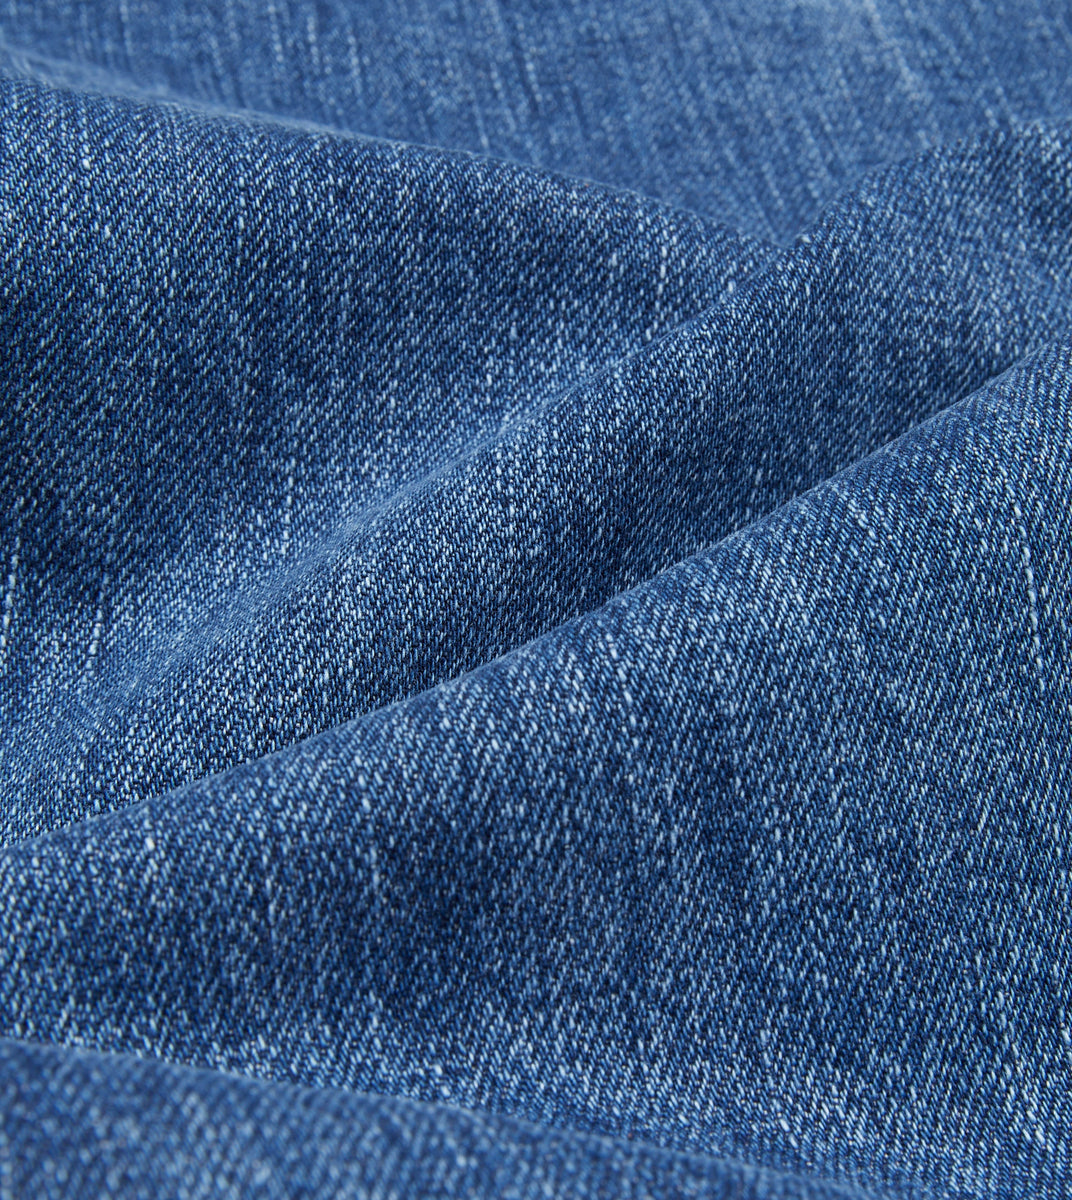 Jeans Drakes Wash Japanese 14.2oz Selvedge US Bleach Denim – Five-Pocket